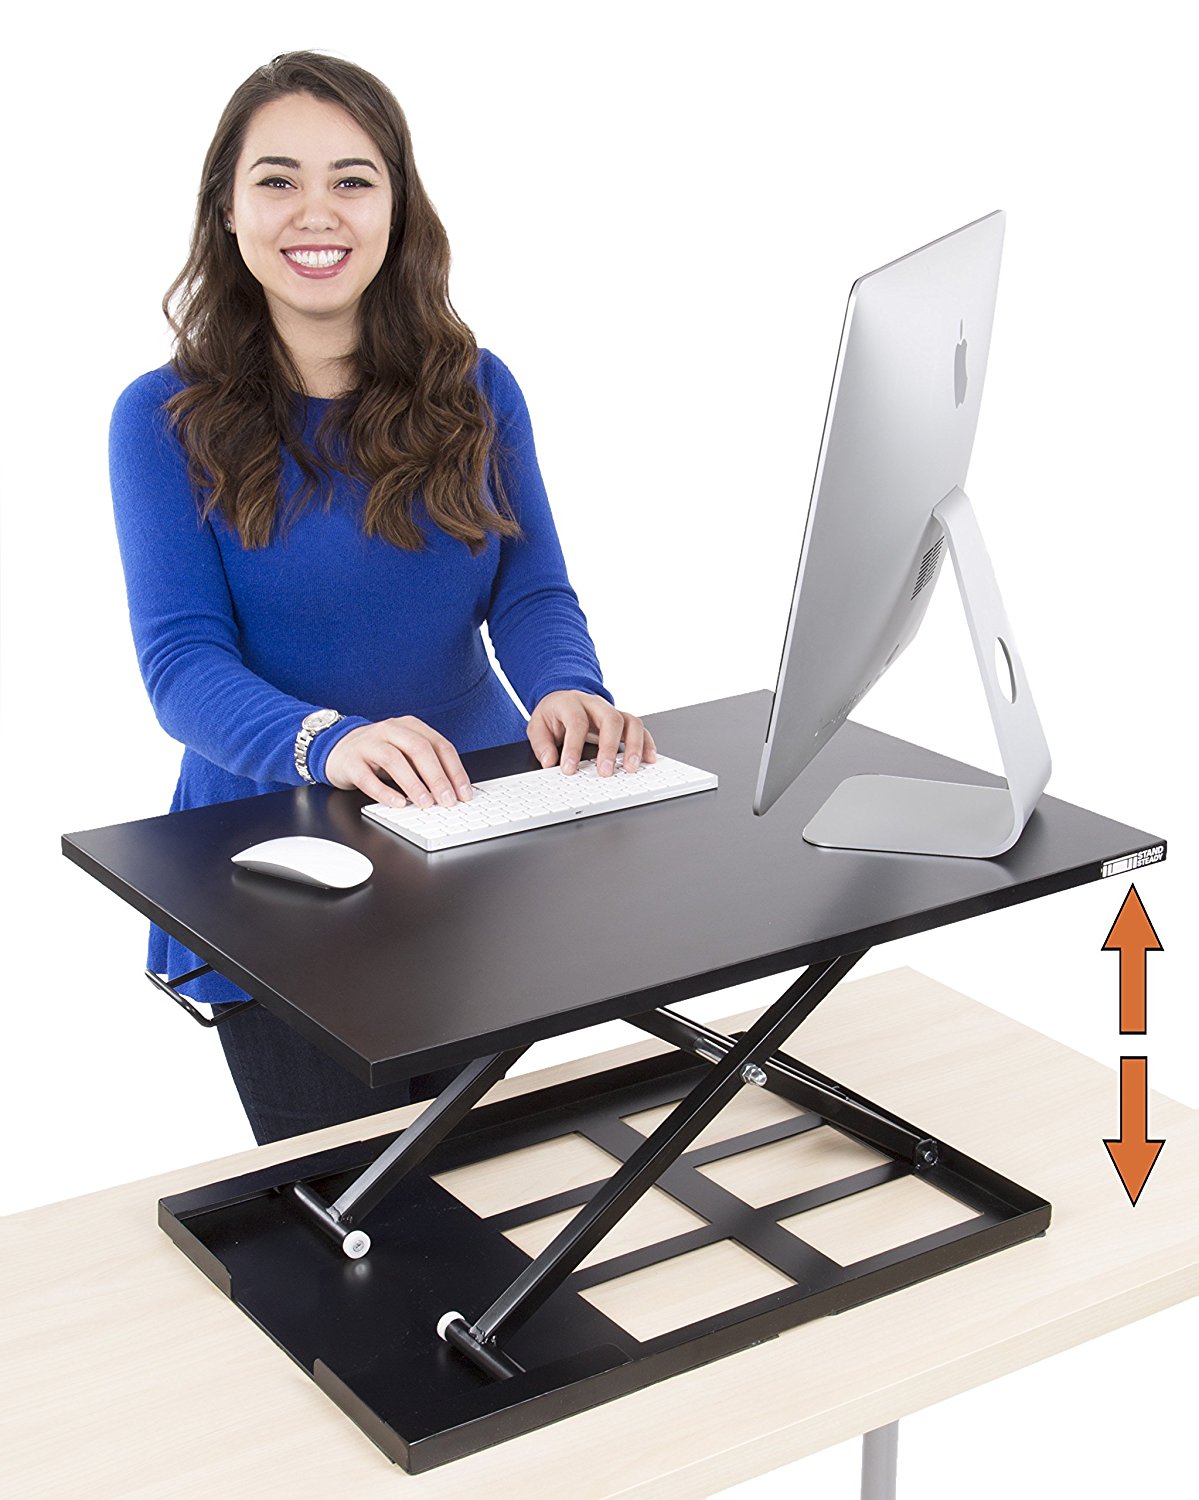 Review of Standing Desk - X-Elite Pro Height Adjustable Desk Converter